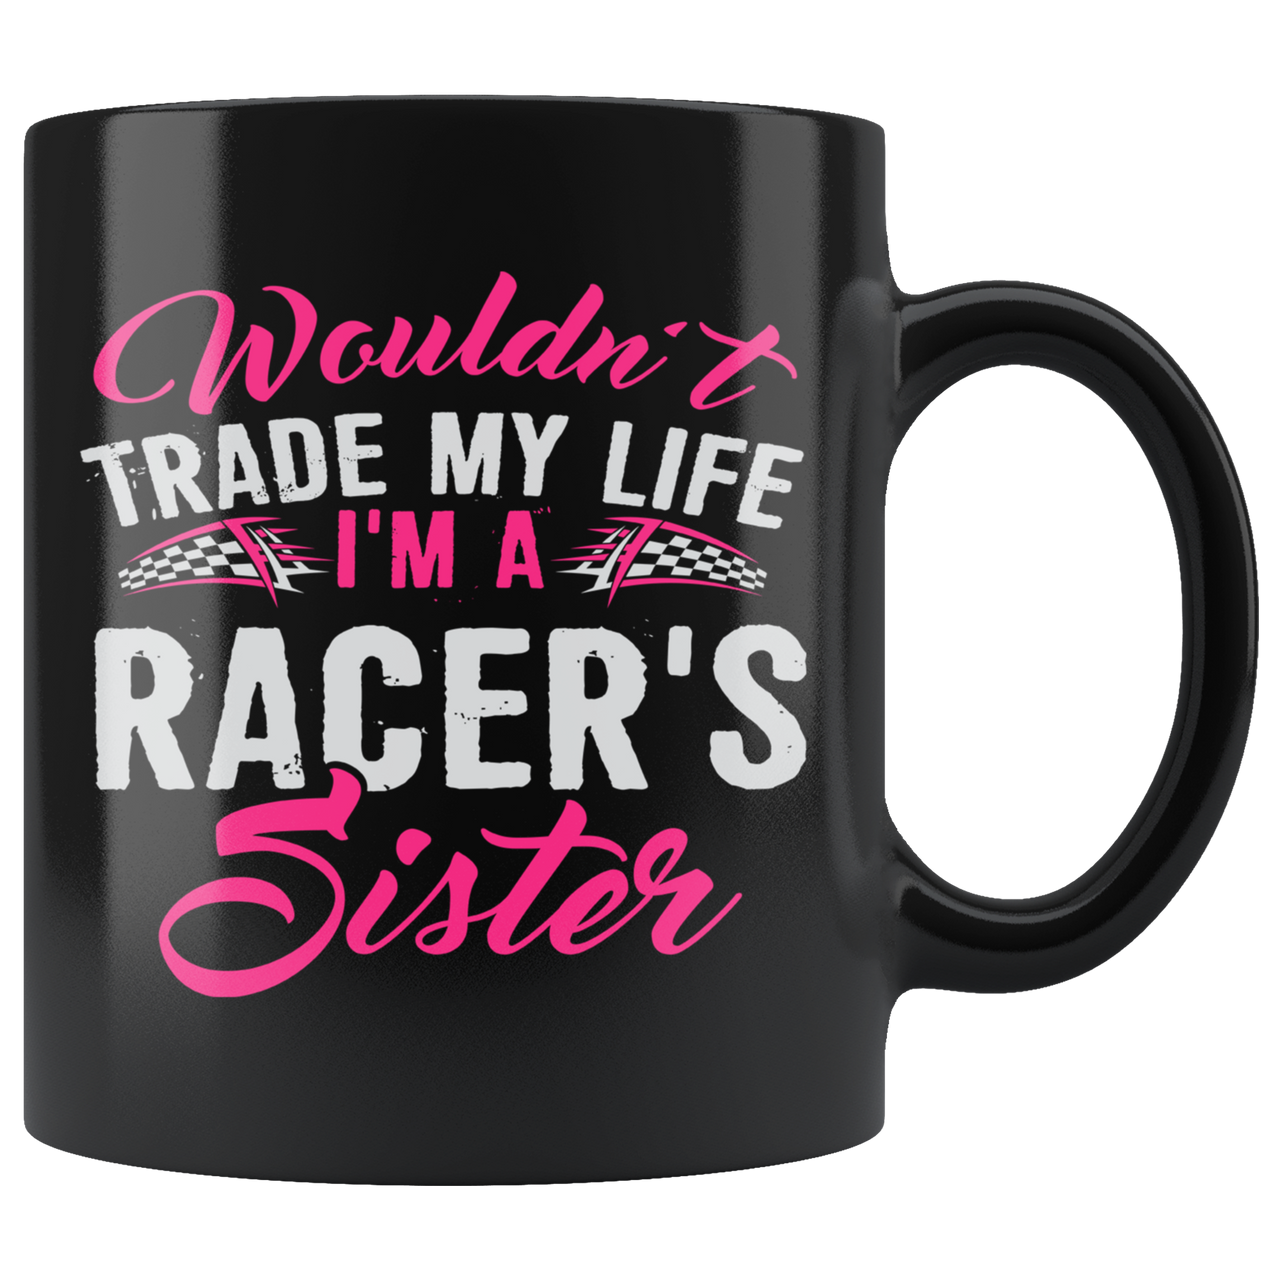 Wouldn't Trade My Life I'm A Racer's Sister Mug!